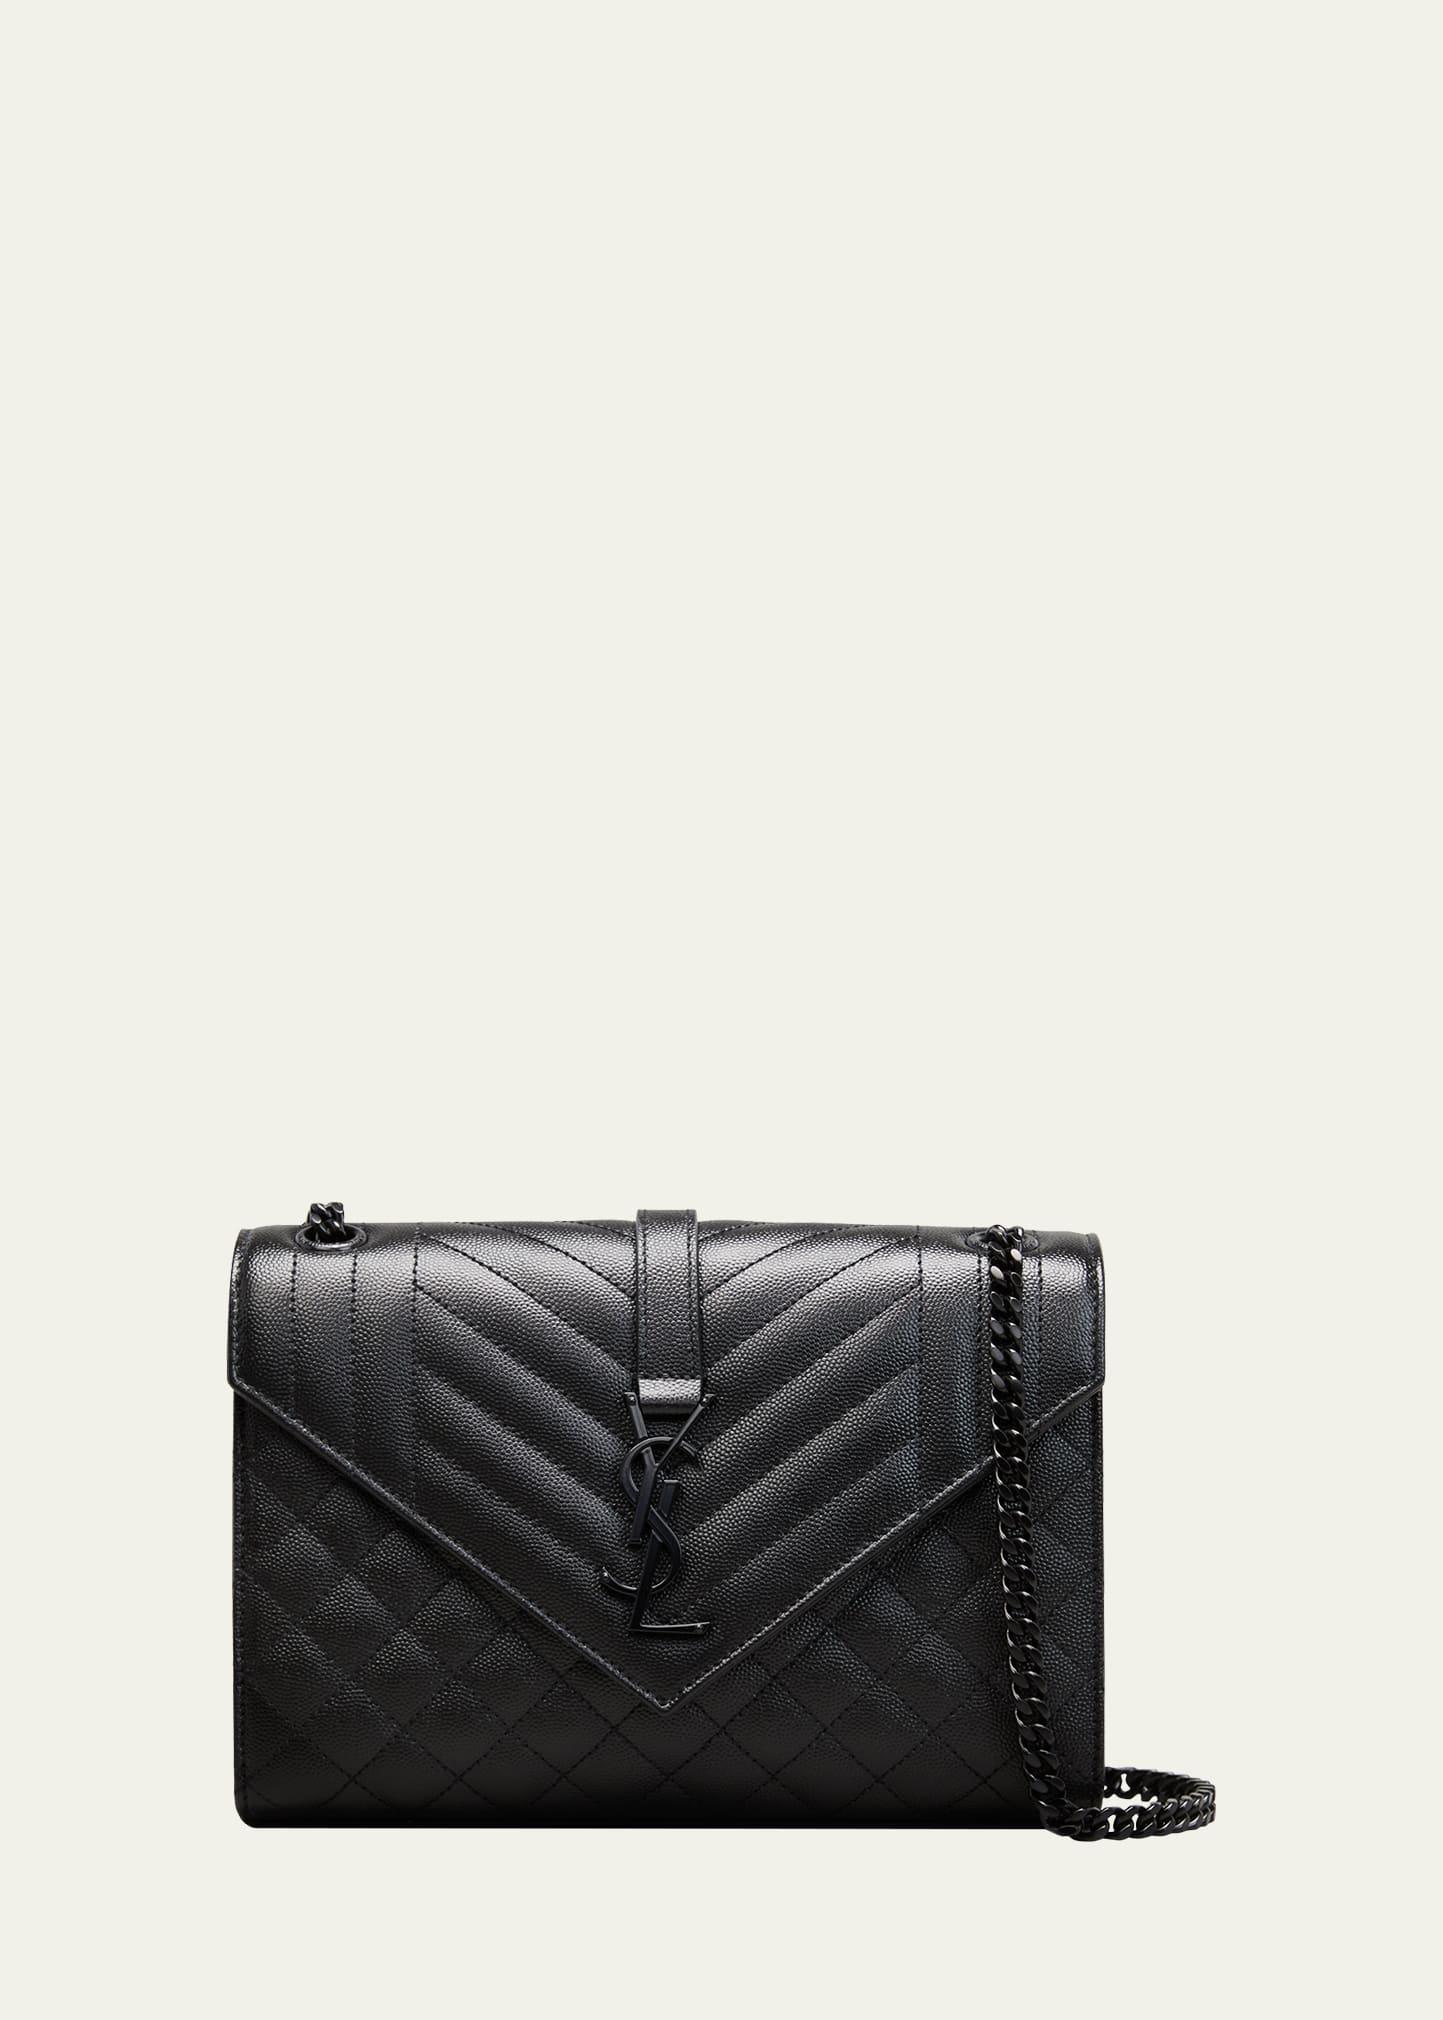 Saint Laurent Medium Ysl Envelope Chain Shoulder Bag in Black